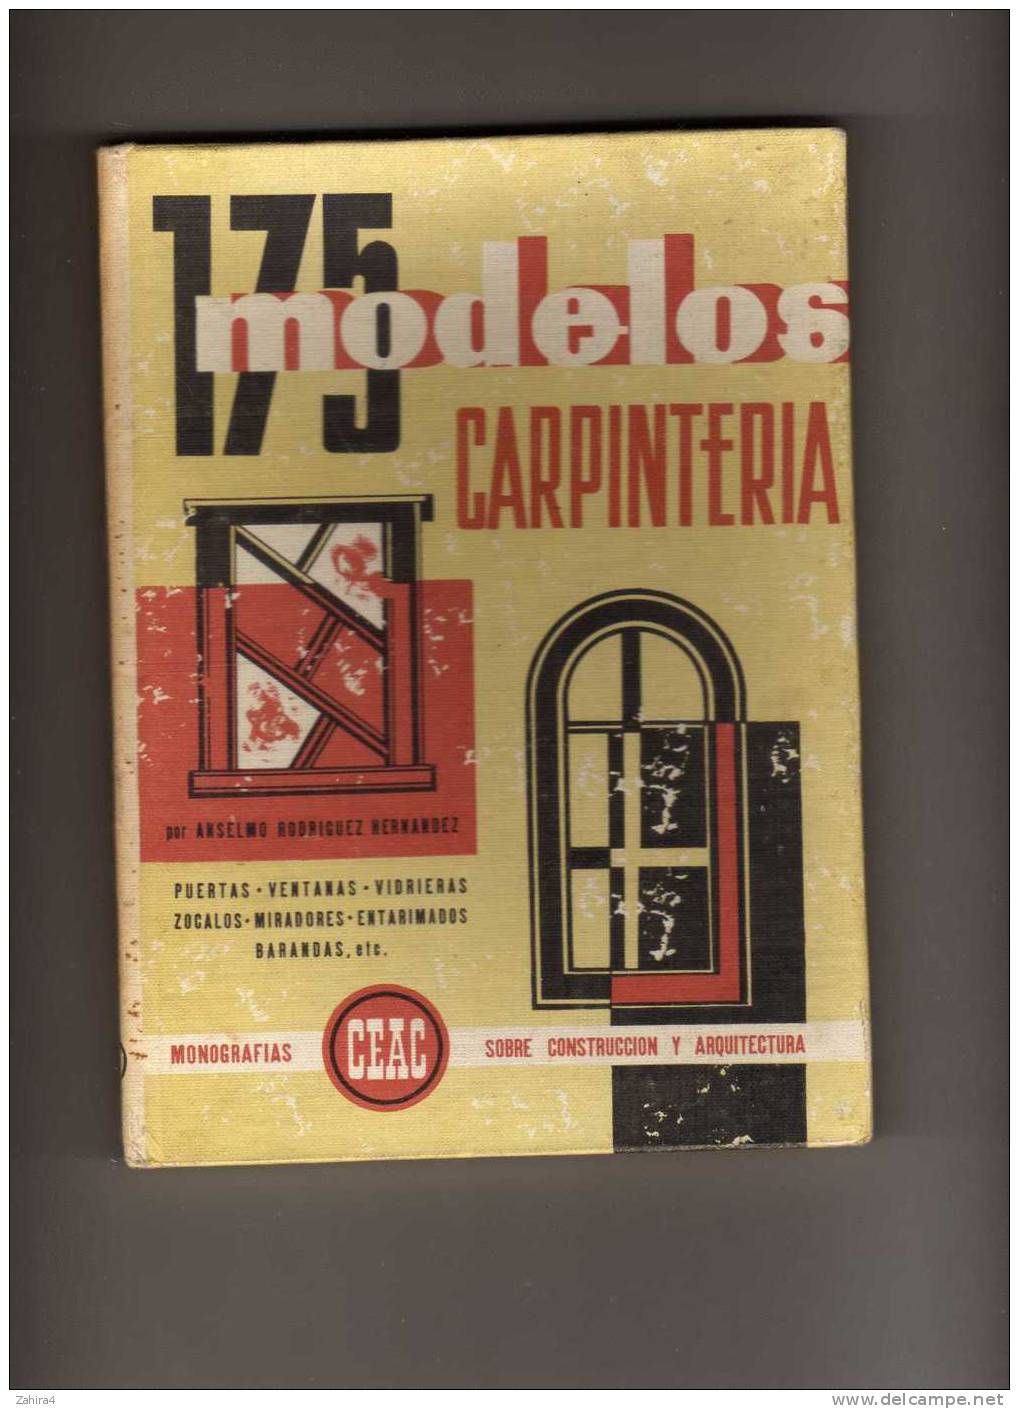 Carpinteria  -  175 Modelos Por Anselmo Rodriguez Hernandez - Monografias CEAC - Practical